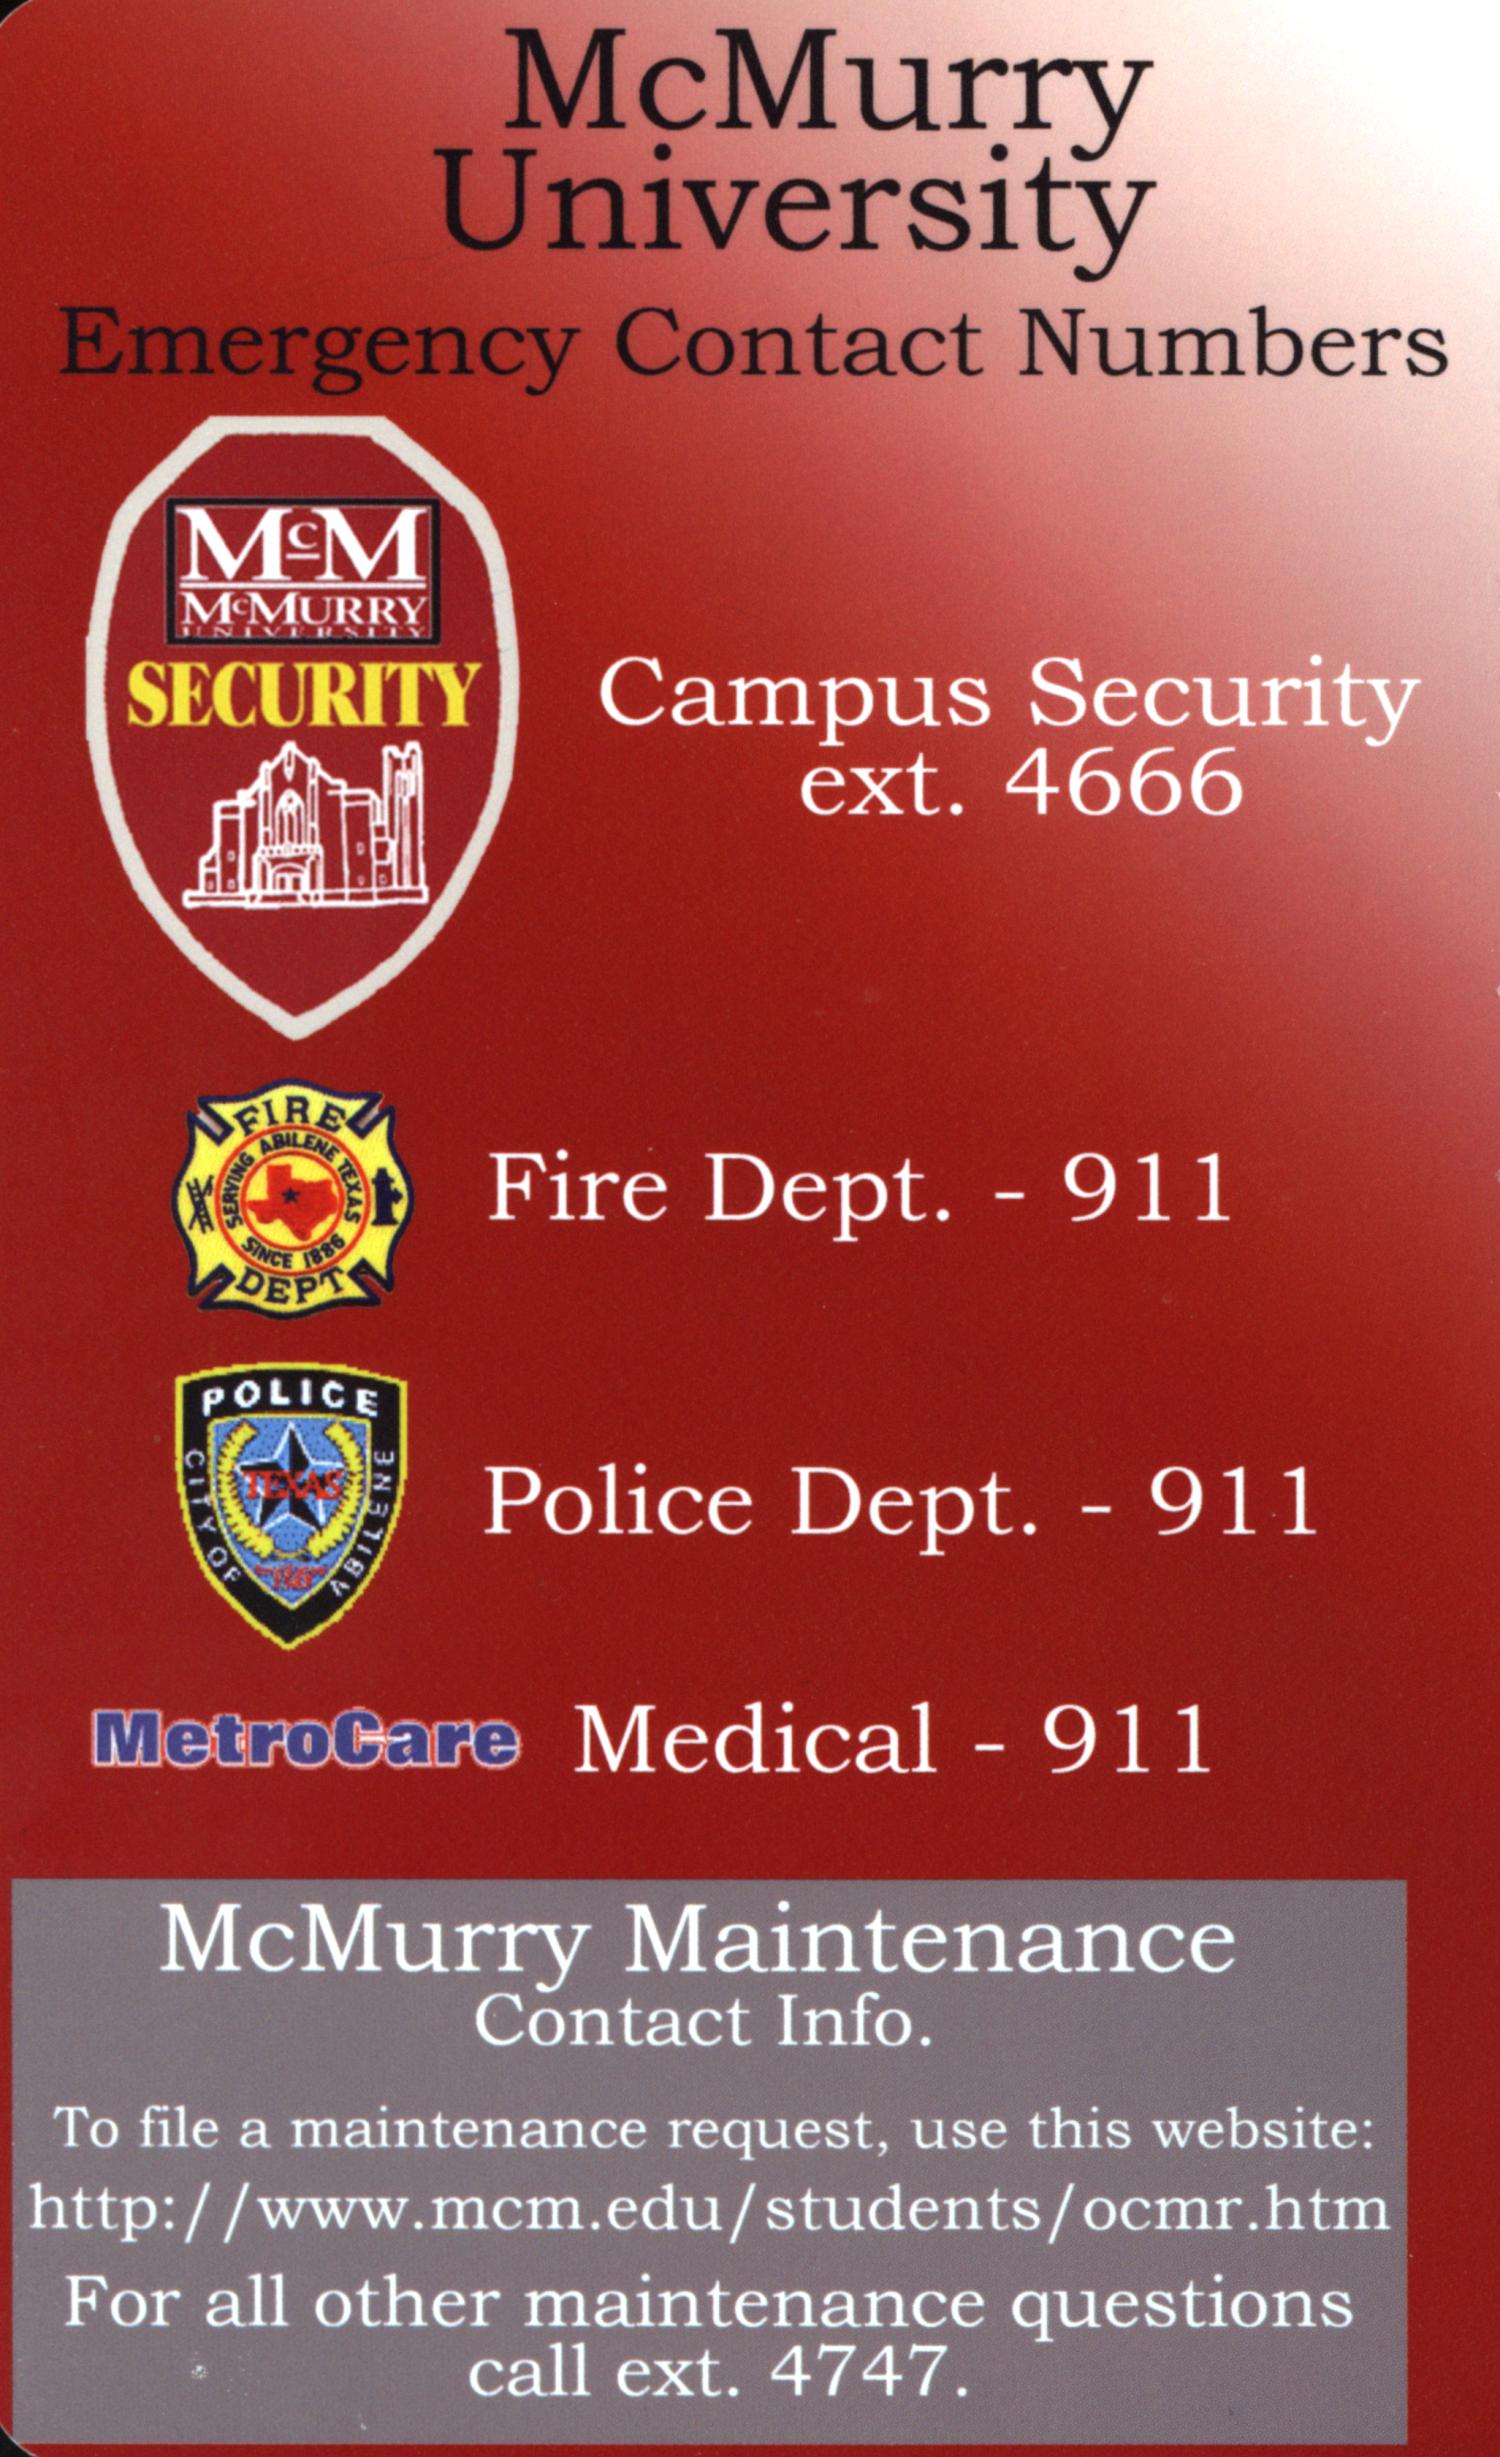 Council Fire, Handbook of McMurry University, 2006-2007
                                                
                                                    Front Inside
                                                